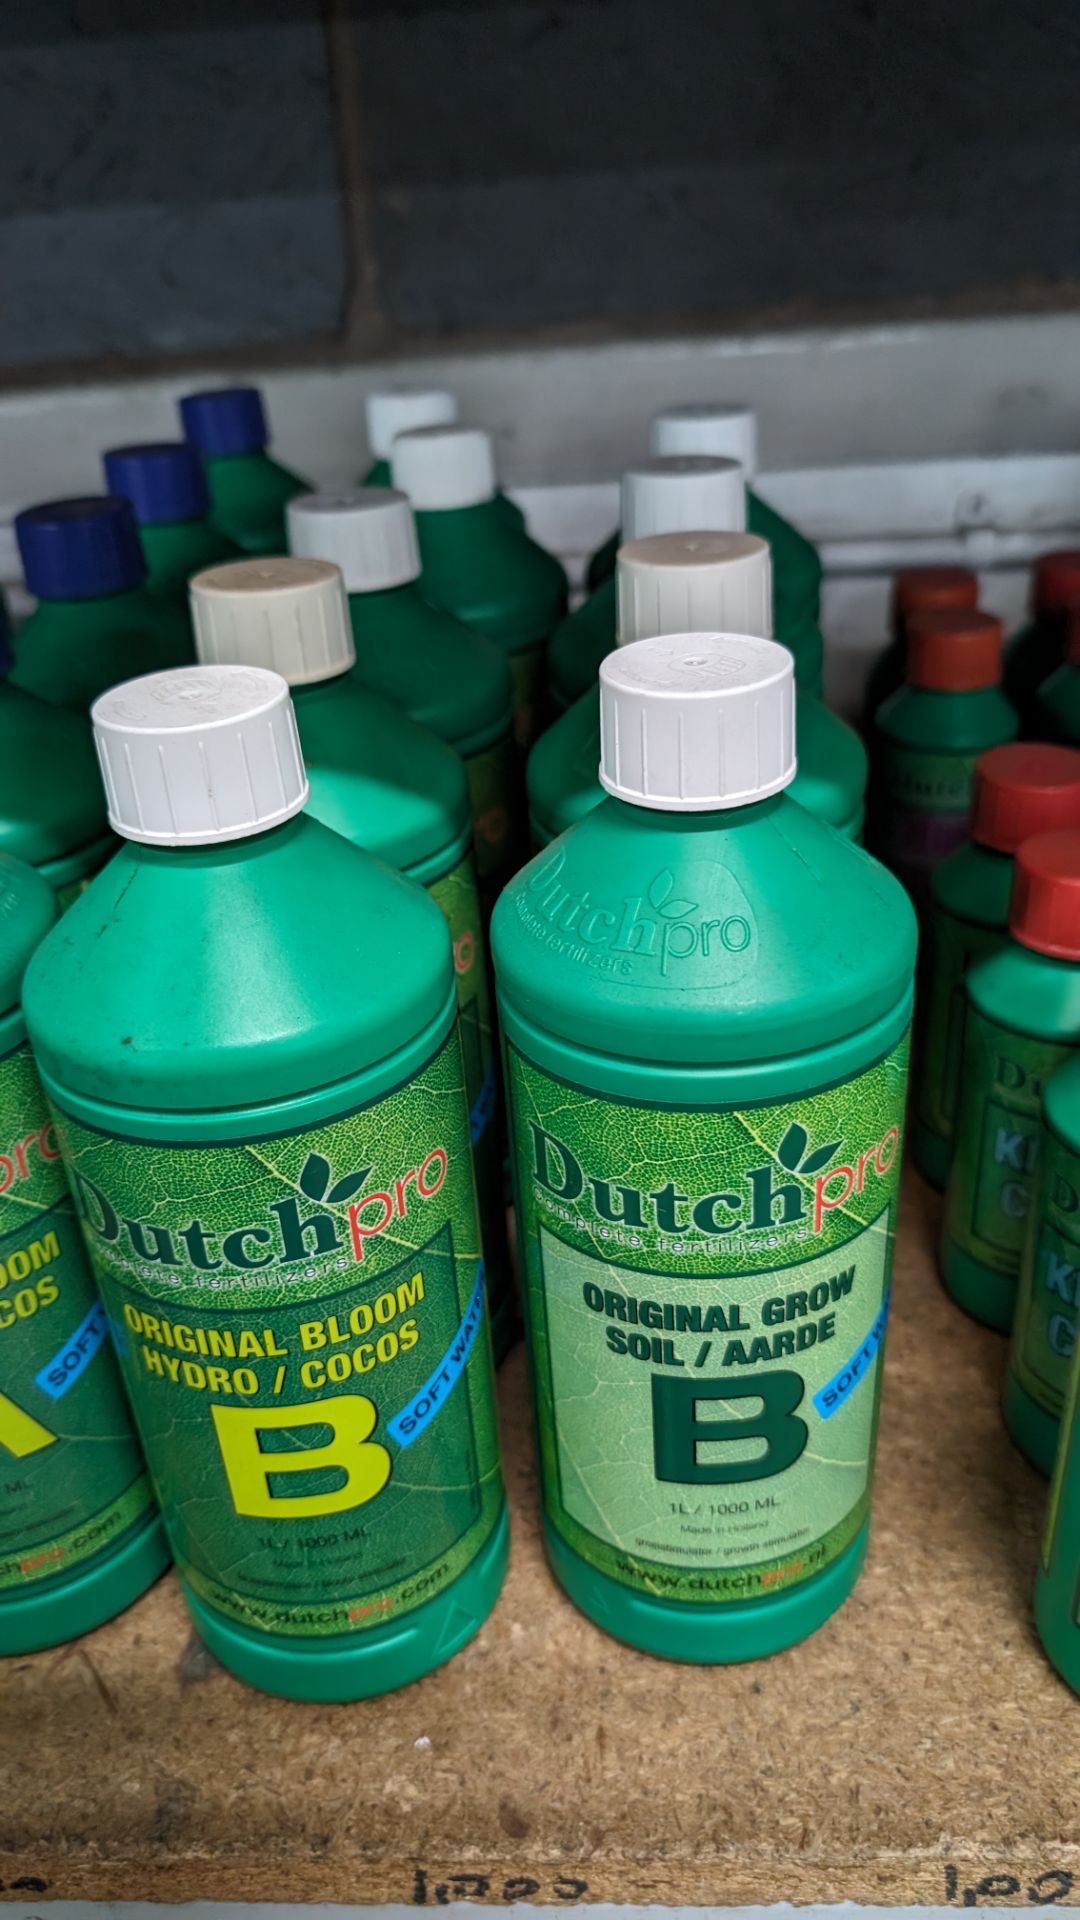 18 off 1 litre bottles of Dutch Pro Original products, comprising 4 off 1 litre bottles of Grow Soil - Image 4 of 4